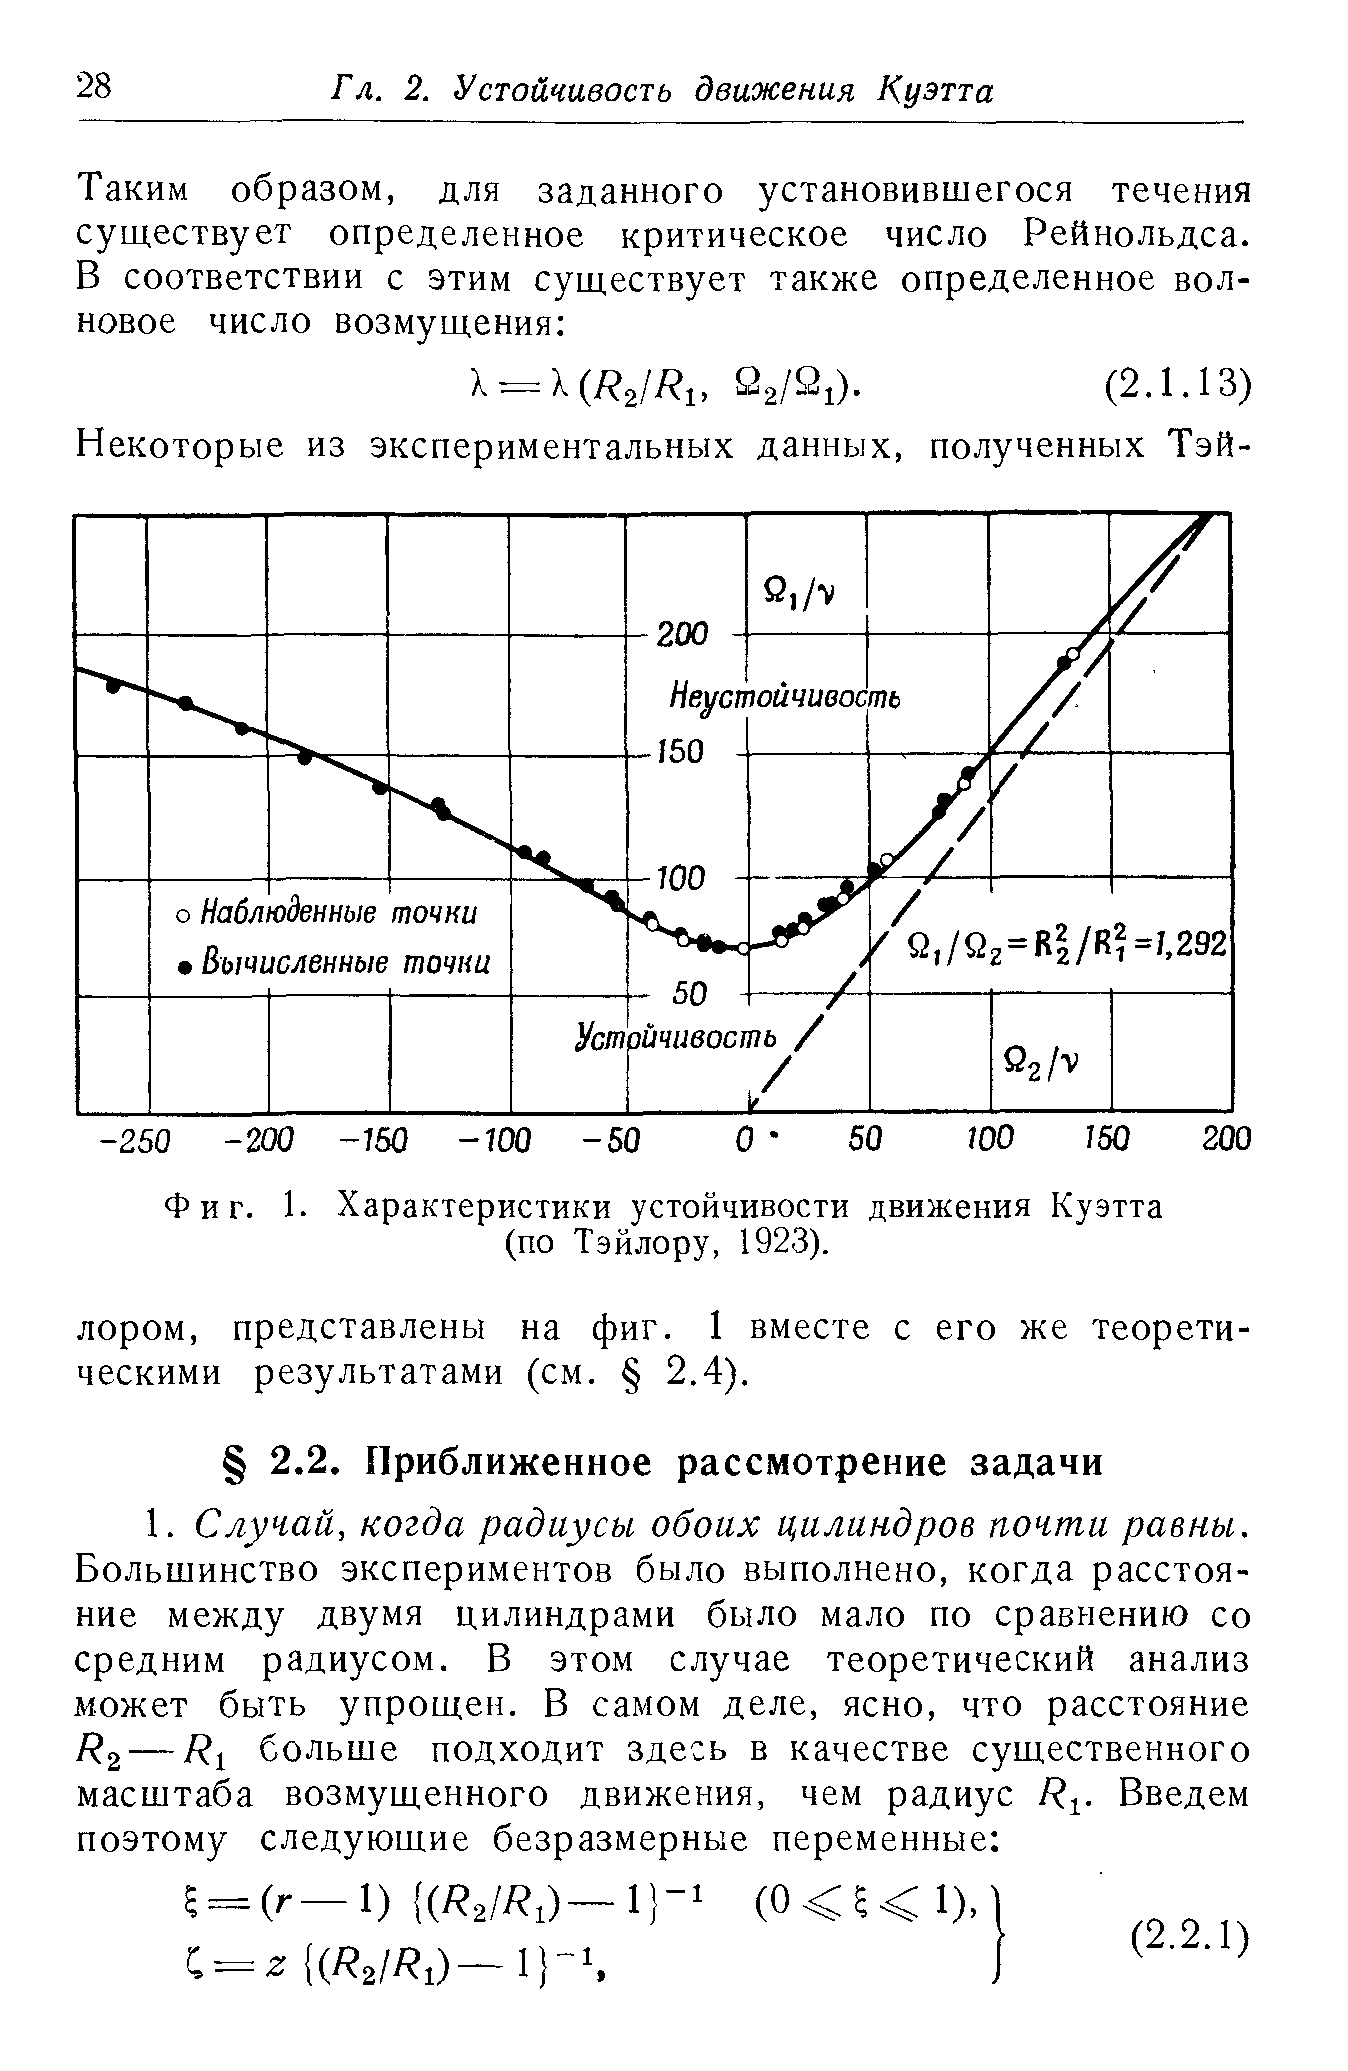 Фиг. 1. Характеристики устойчивости движения Куэтта (по Тэйлору, 1923).
